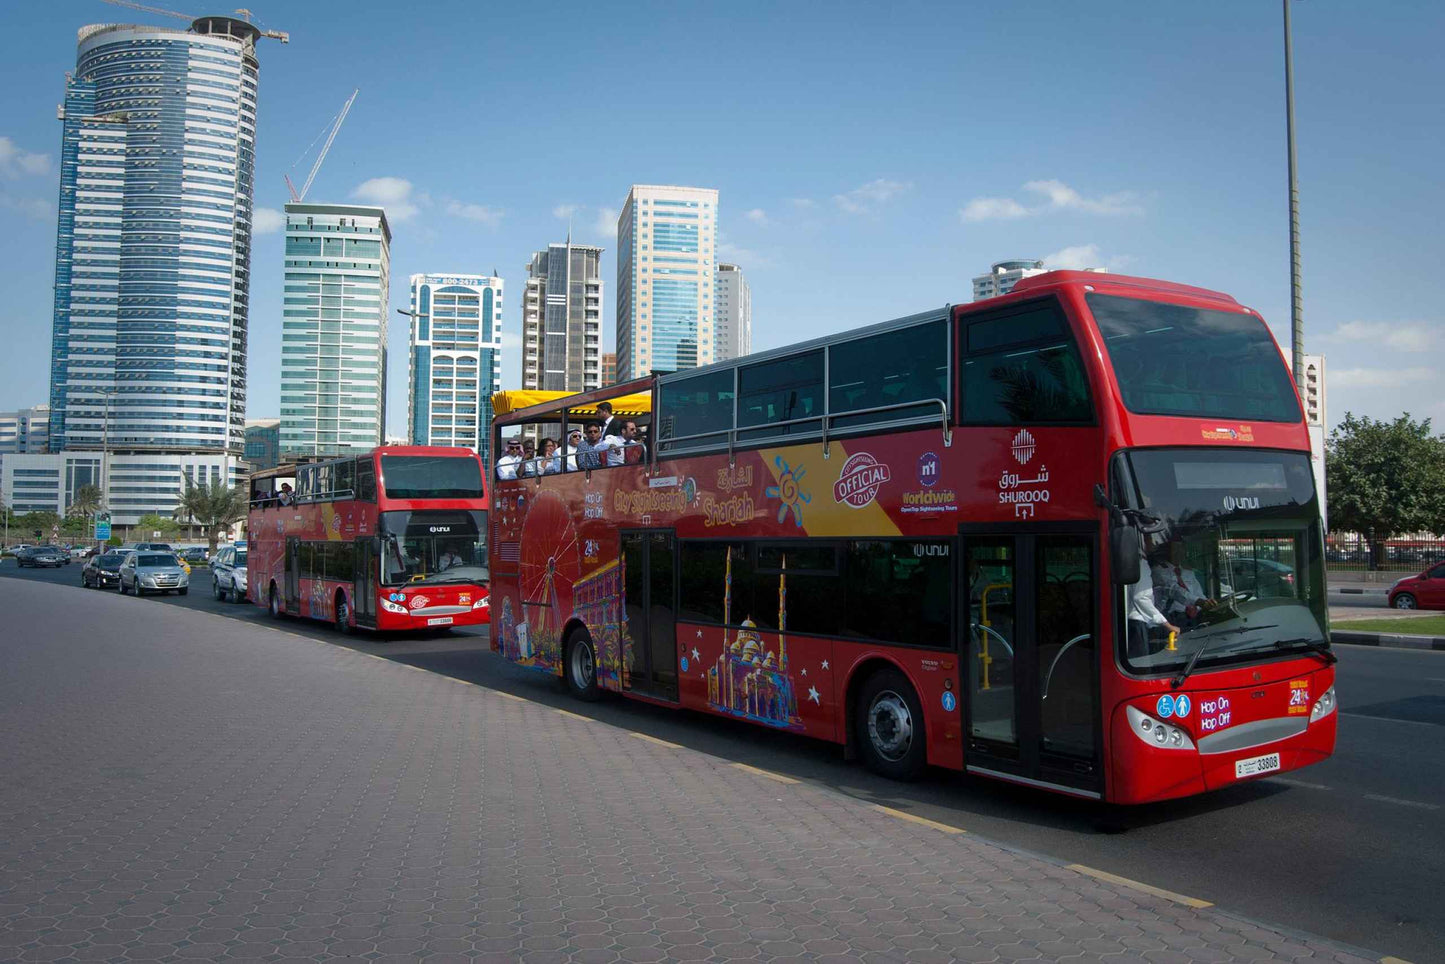 Dubai Big Bus Tour - Tripventura